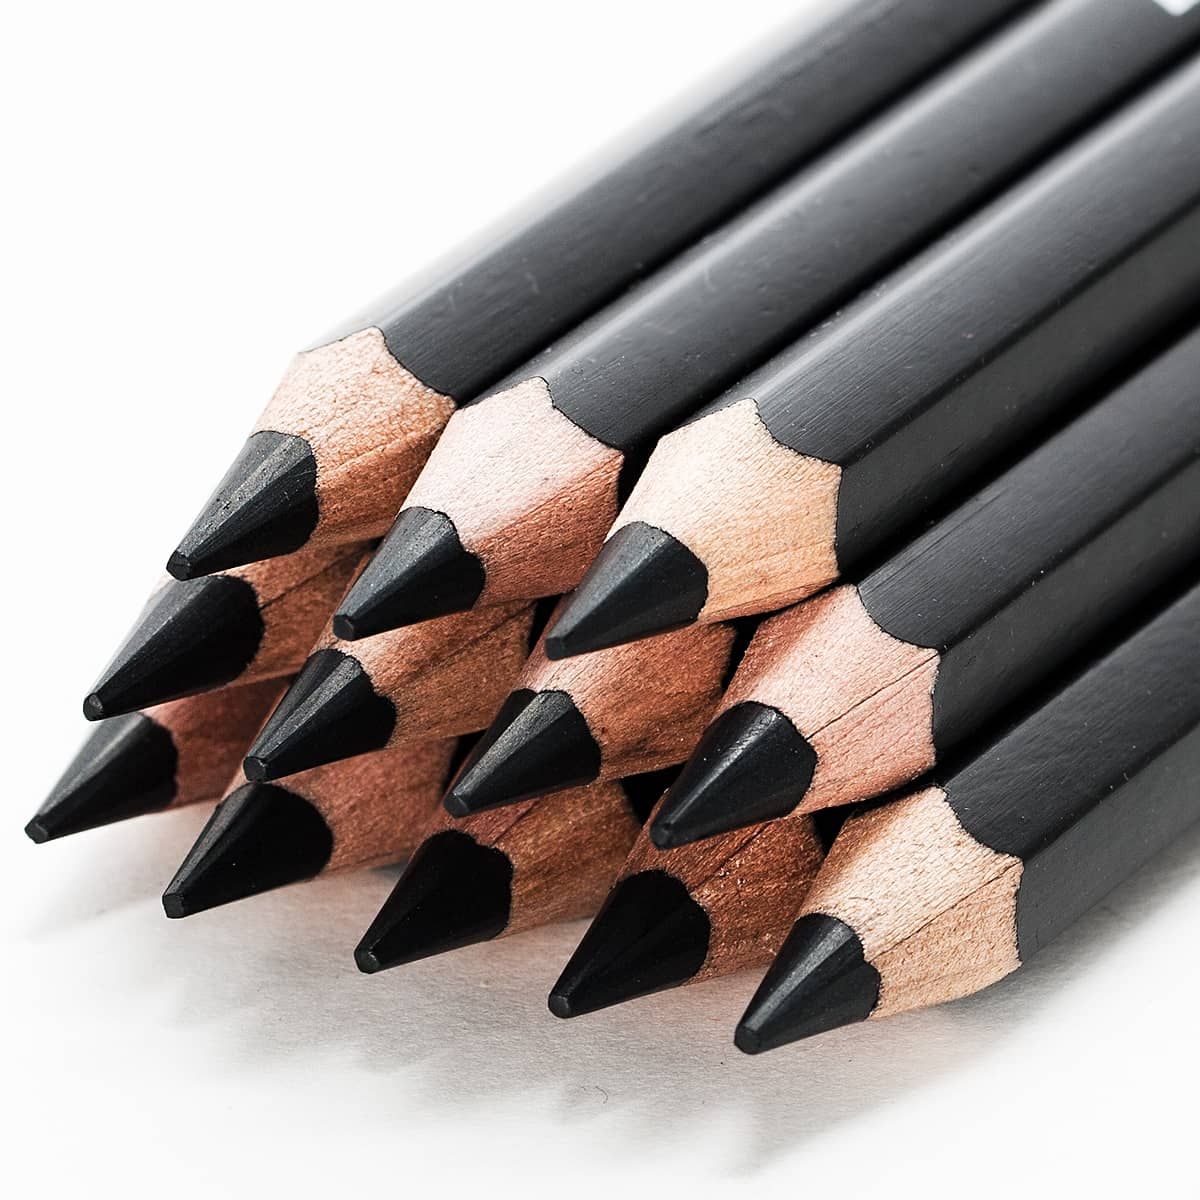 Jerry's Jumbo Jet Charcoal Pencil Set of 12, Black 5.5mm lead